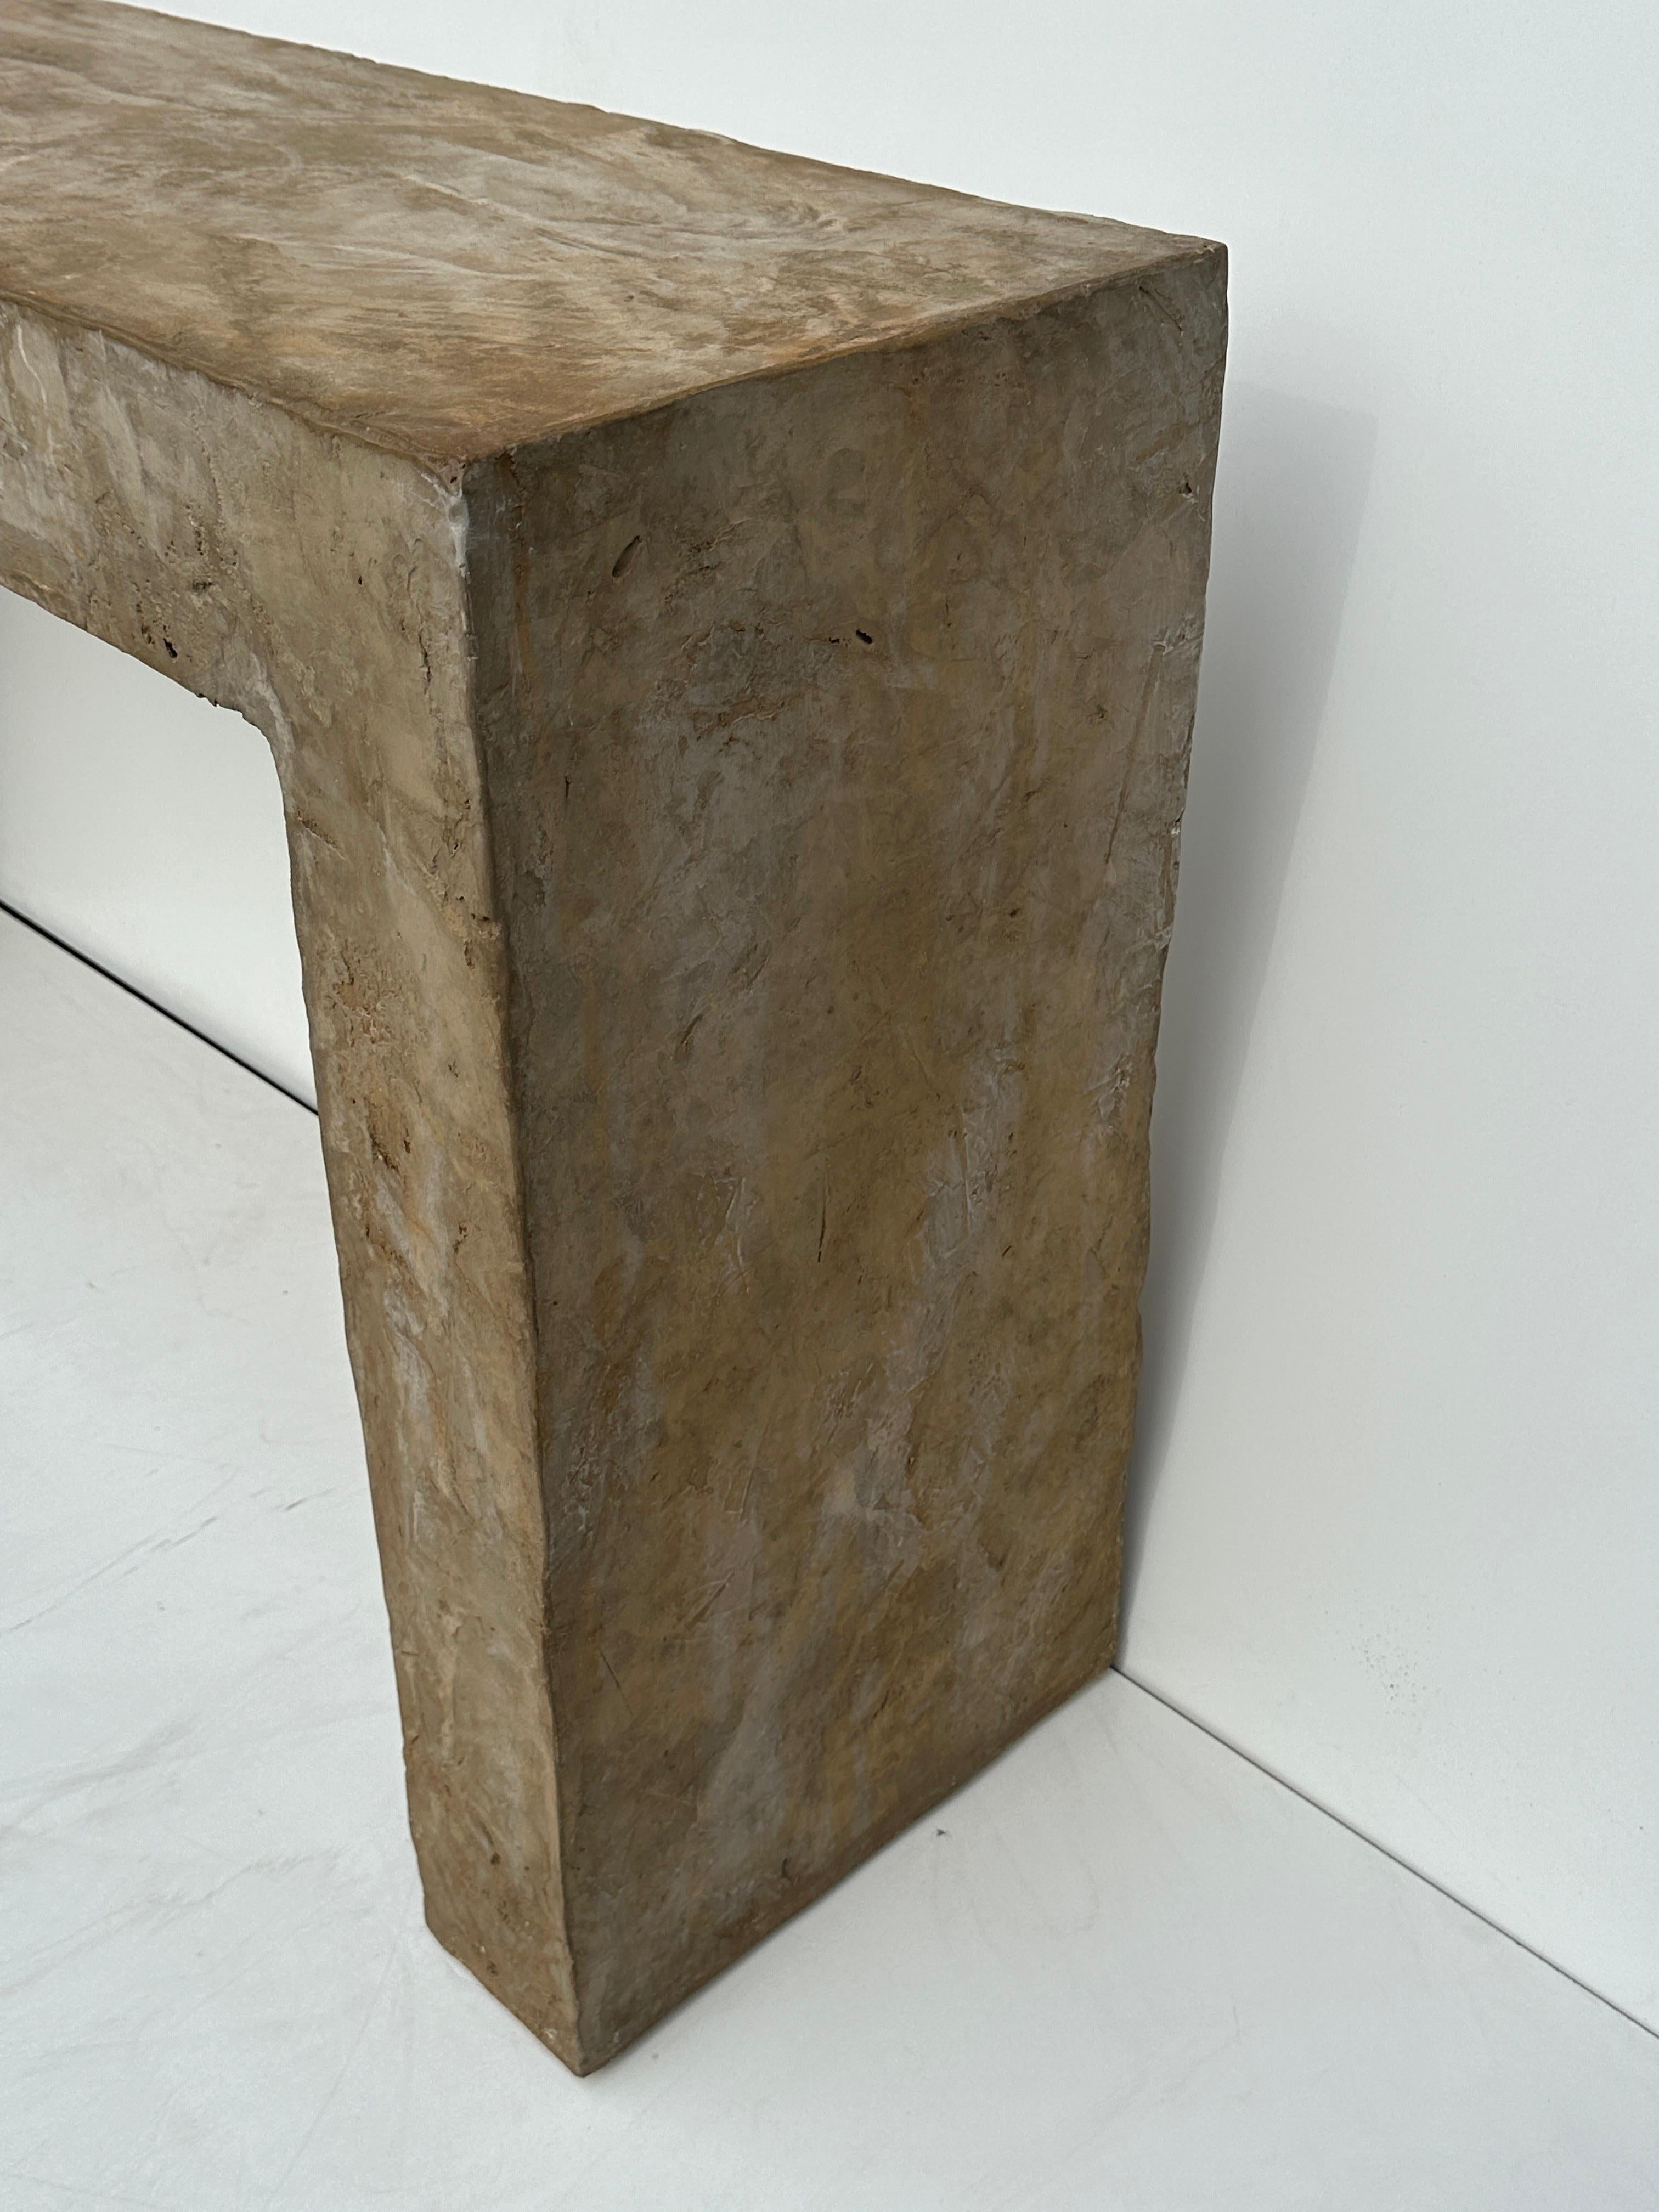 Polished Primitive Organic Concrete Console Table 